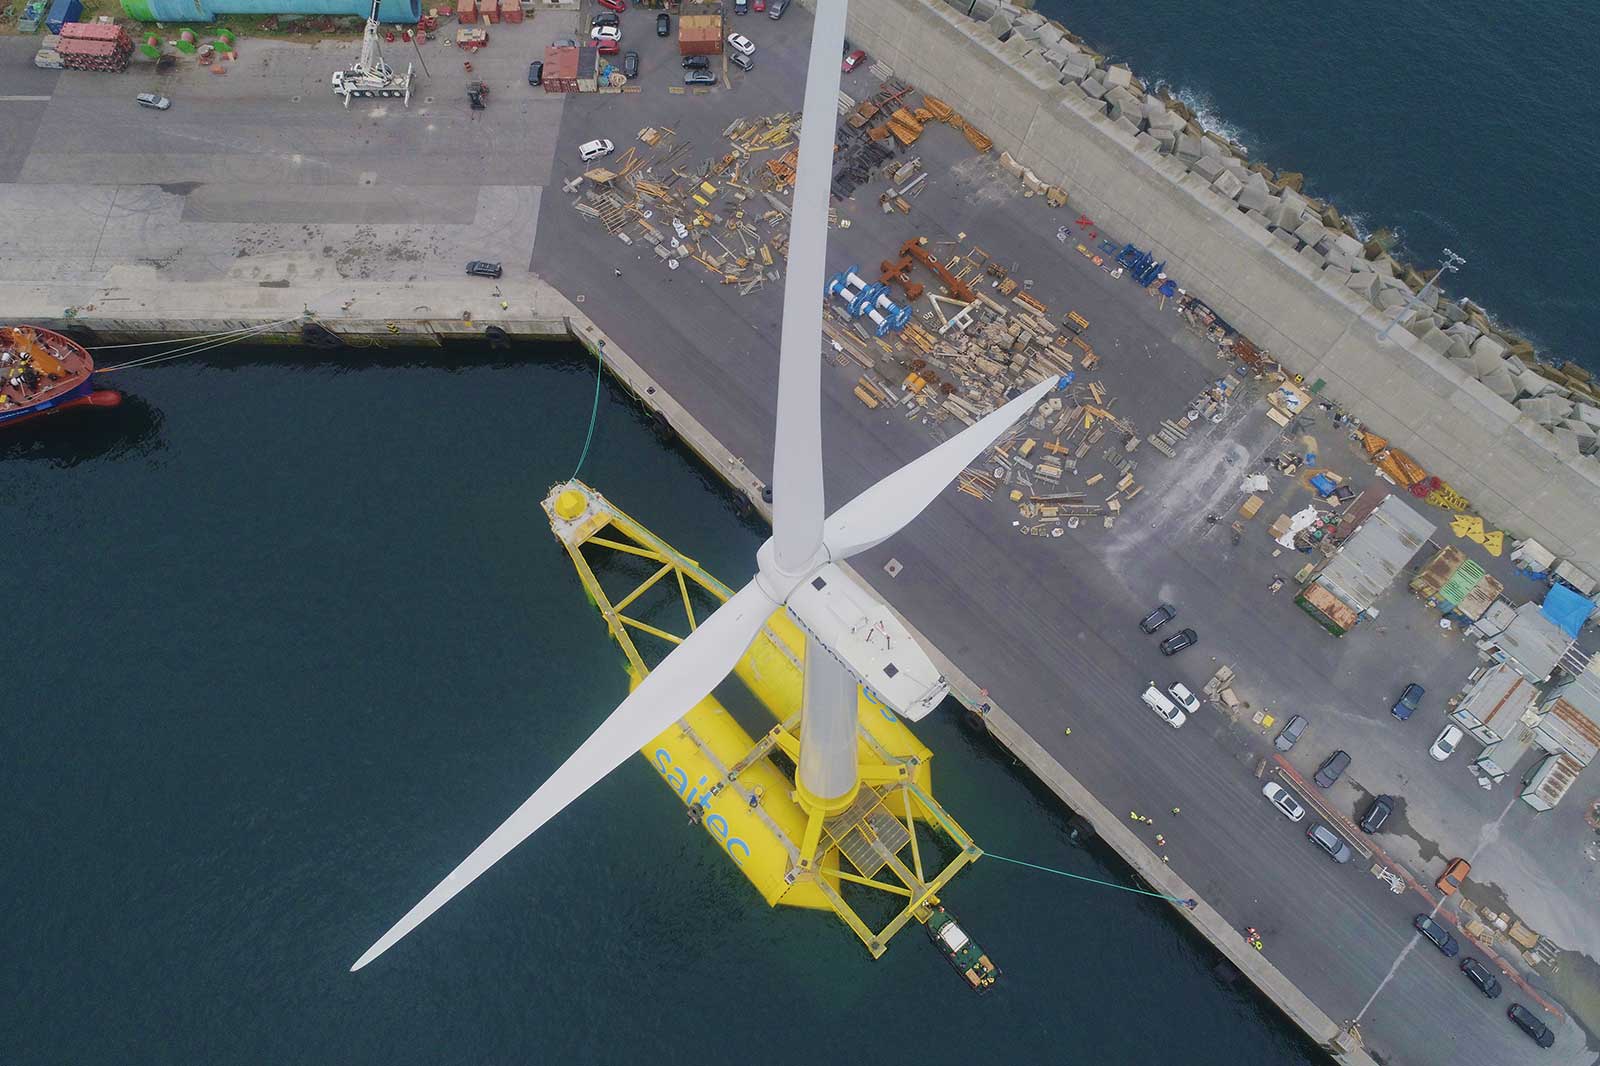 DemoSath - Floating Offshore Wind | RWE